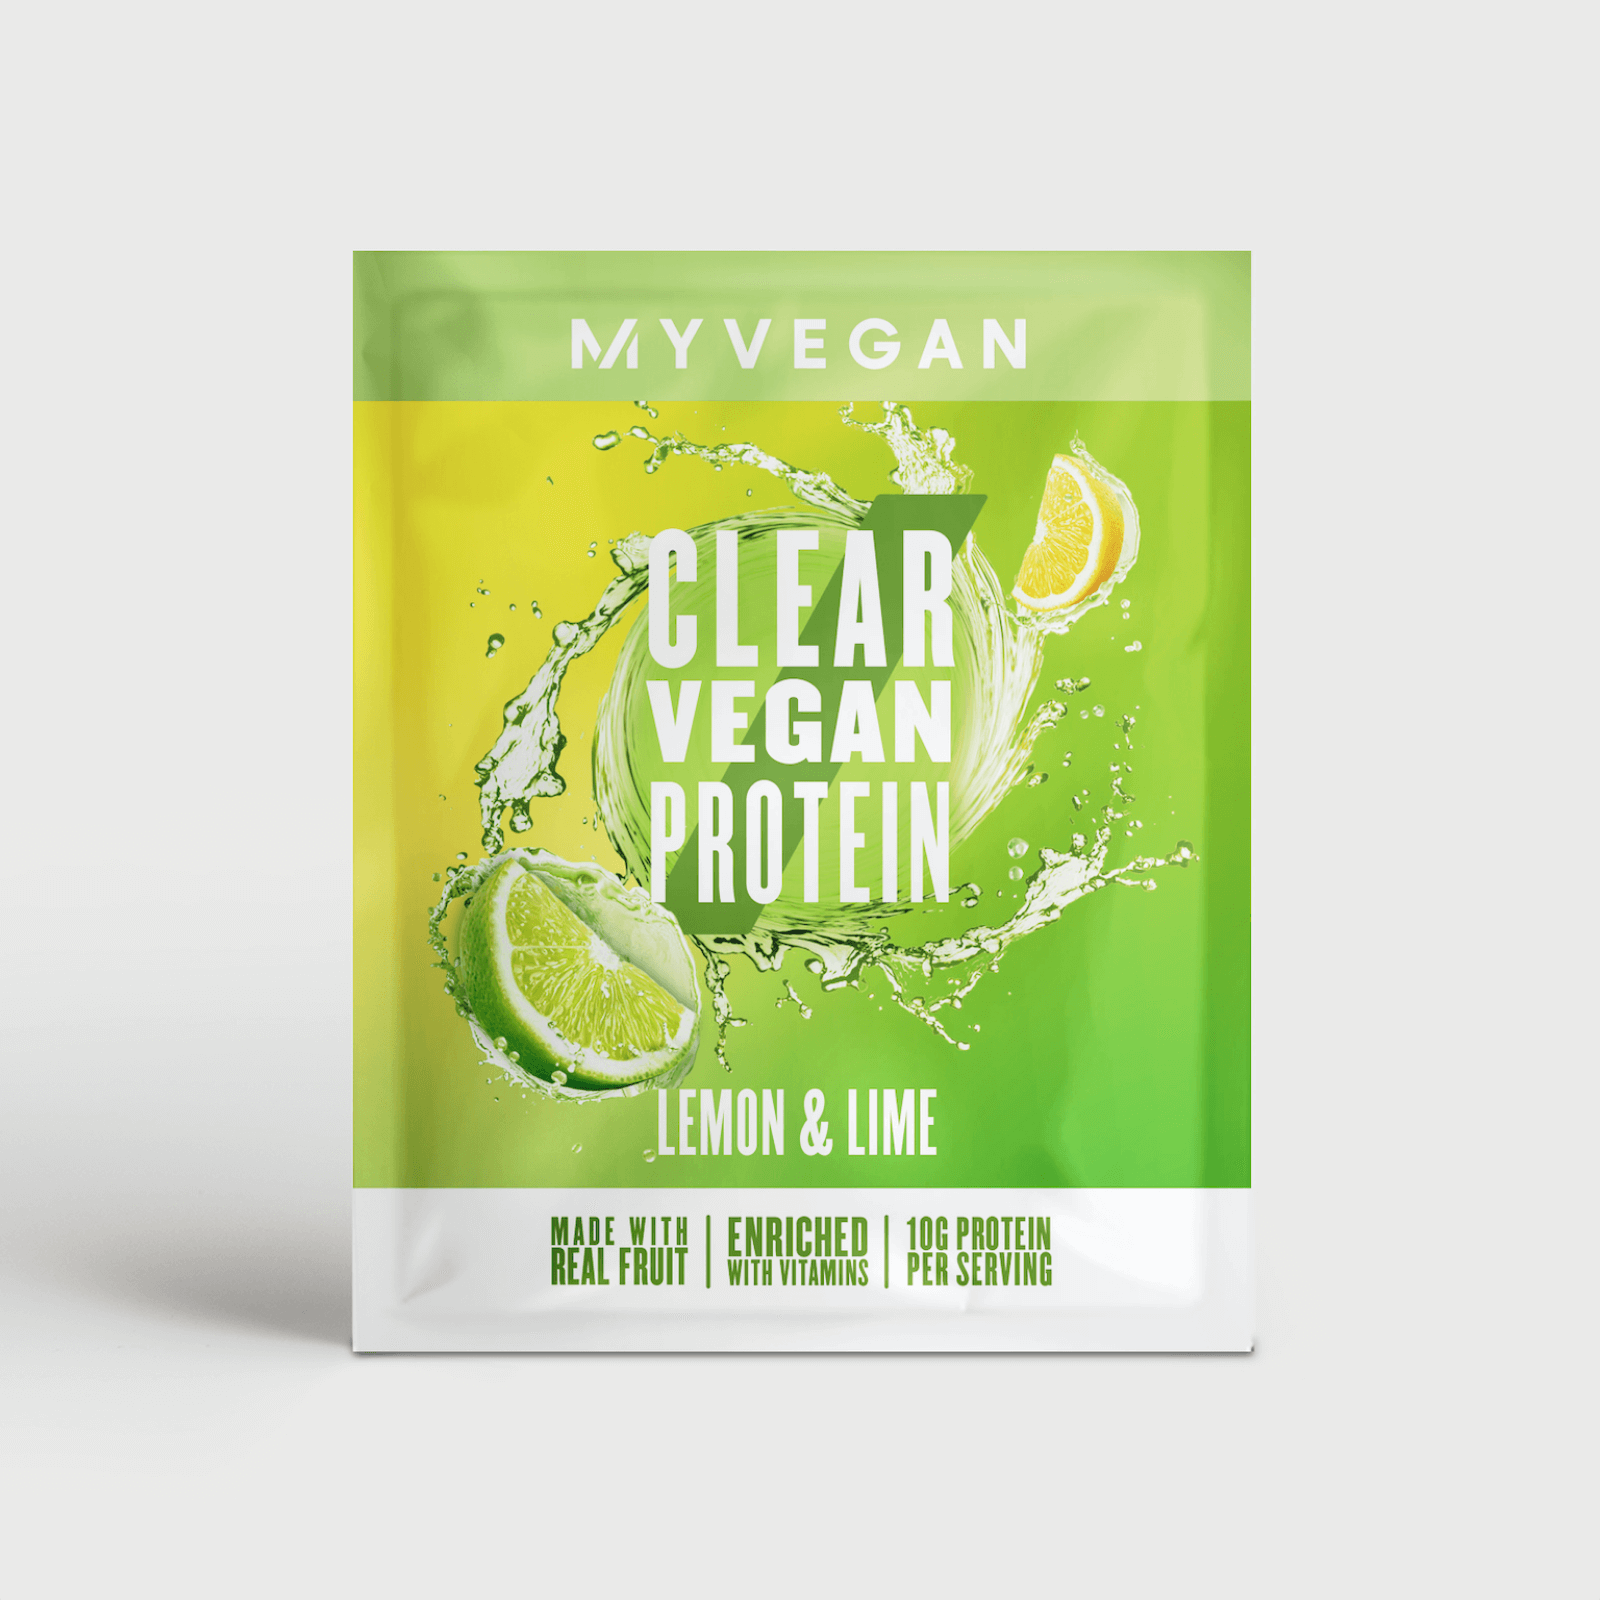 Myvegan Clear Vegan Protein, 16g (Sample) - 16g - เลมอน & ไลม์